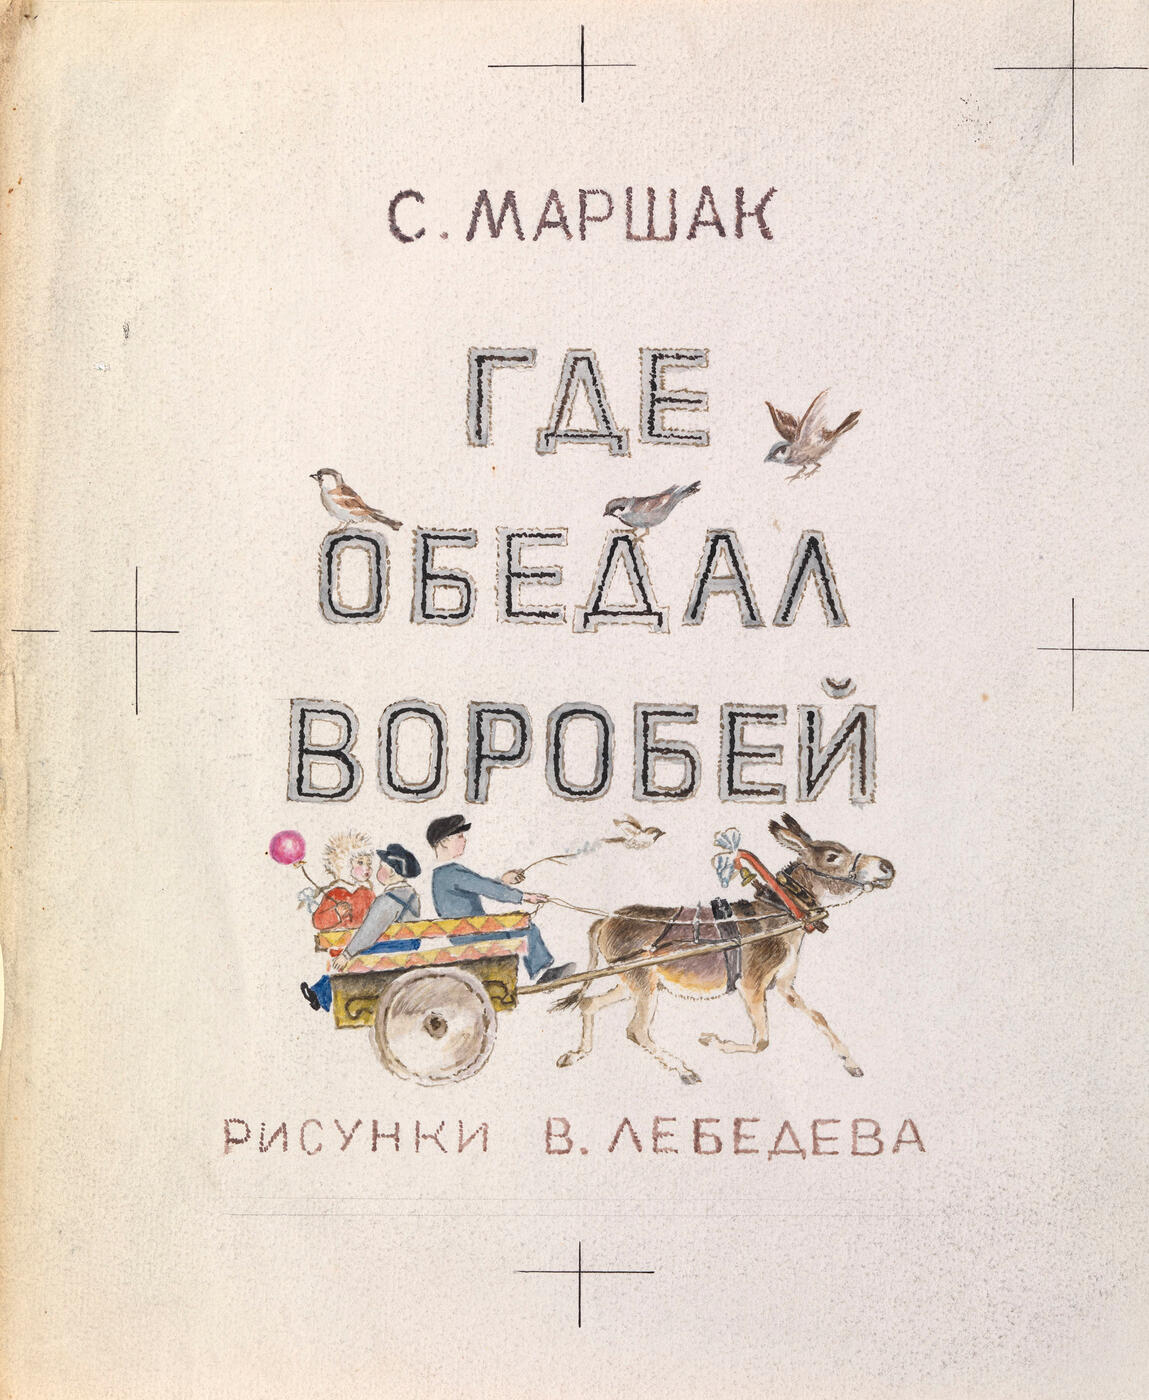 Alternative Version of a Cover Design for S. Marshak's "Gde obedal vorobei"